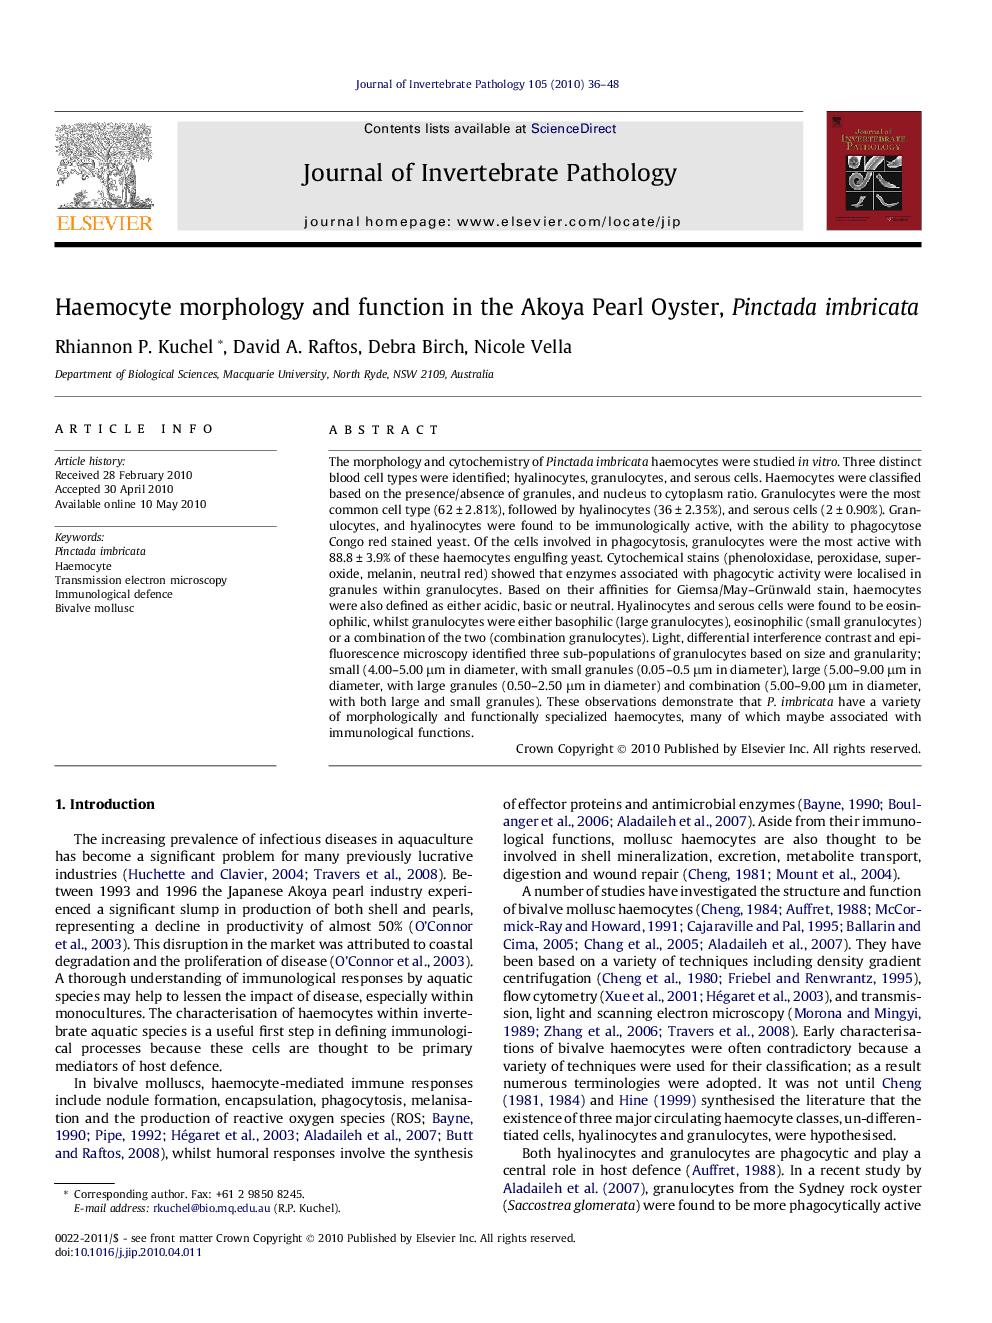 Haemocyte morphology and function in the Akoya Pearl Oyster, Pinctada imbricata